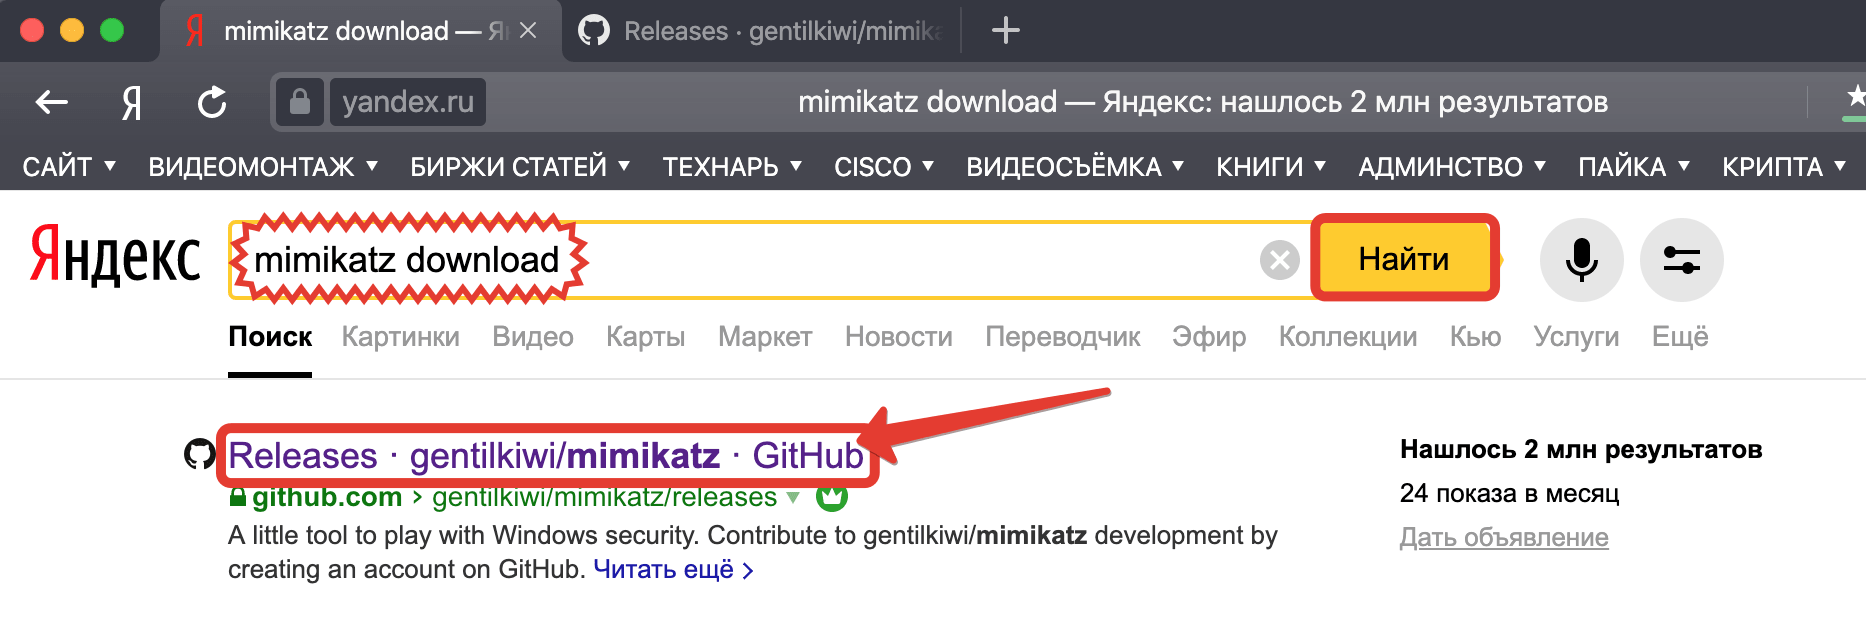 mimikatz download